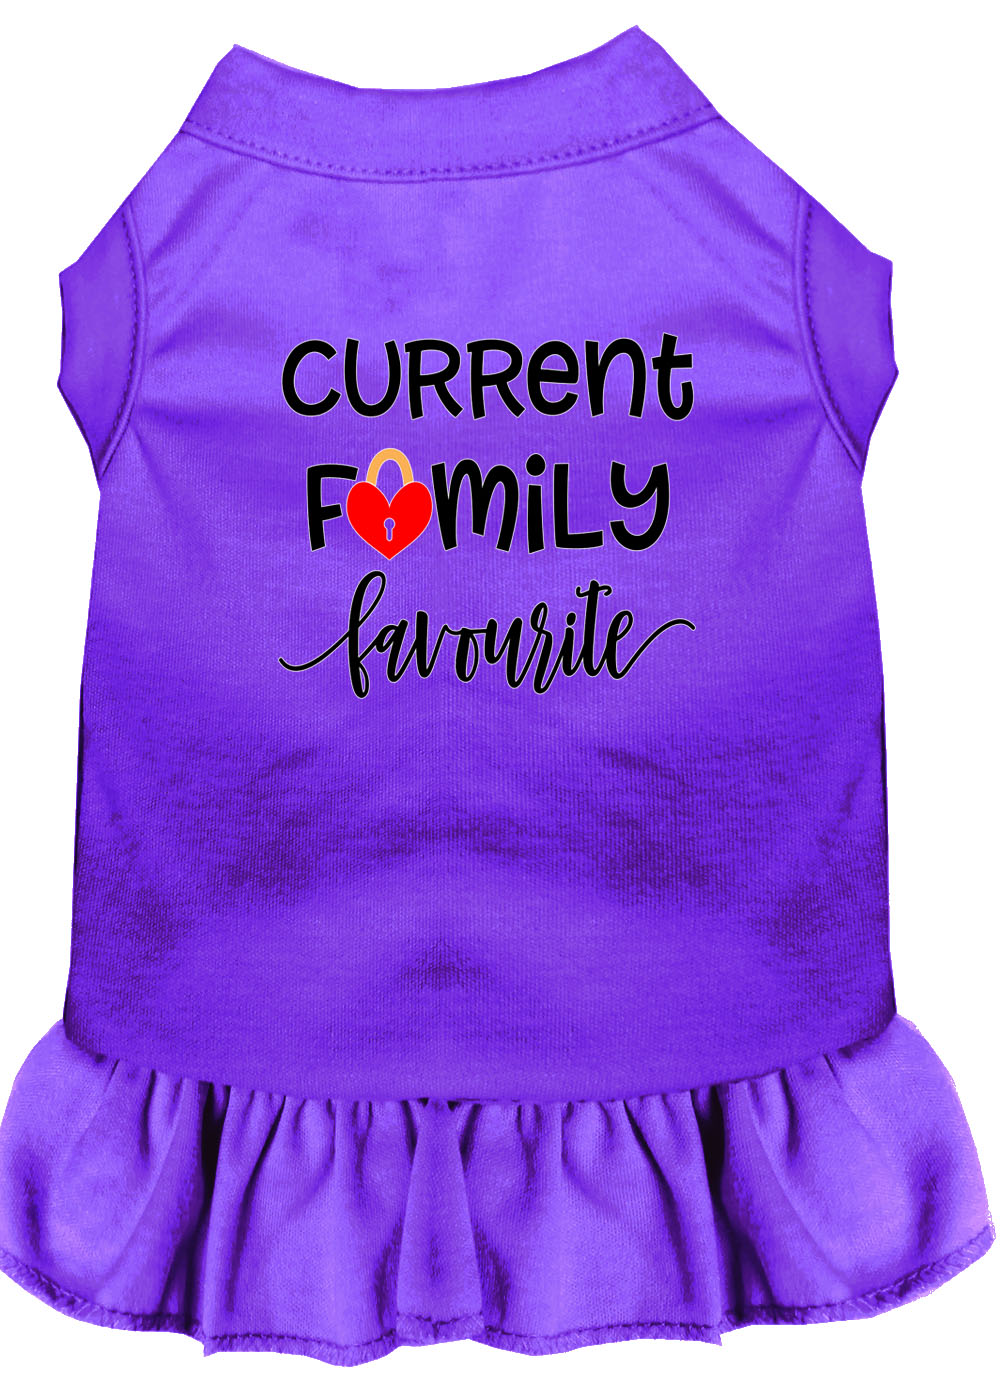 Family Favorite Screen Print Dog Dress Purple 4X